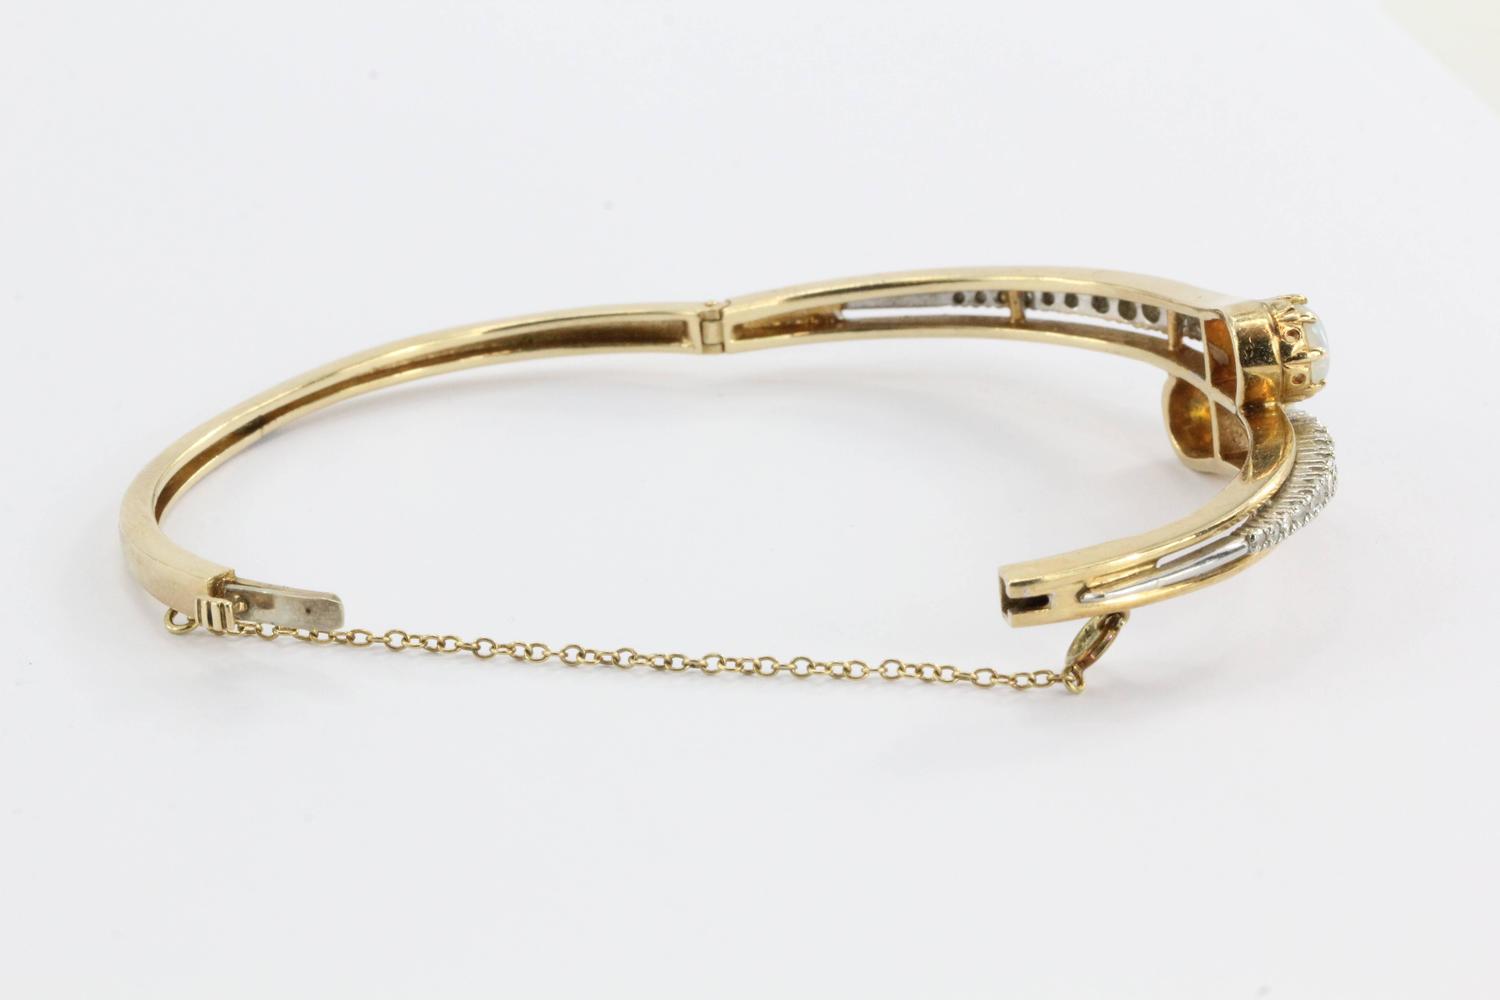 Casbah 14K Gold Diamond and Translucent Opal Bangle Bracelet For Sale at 1stdibs